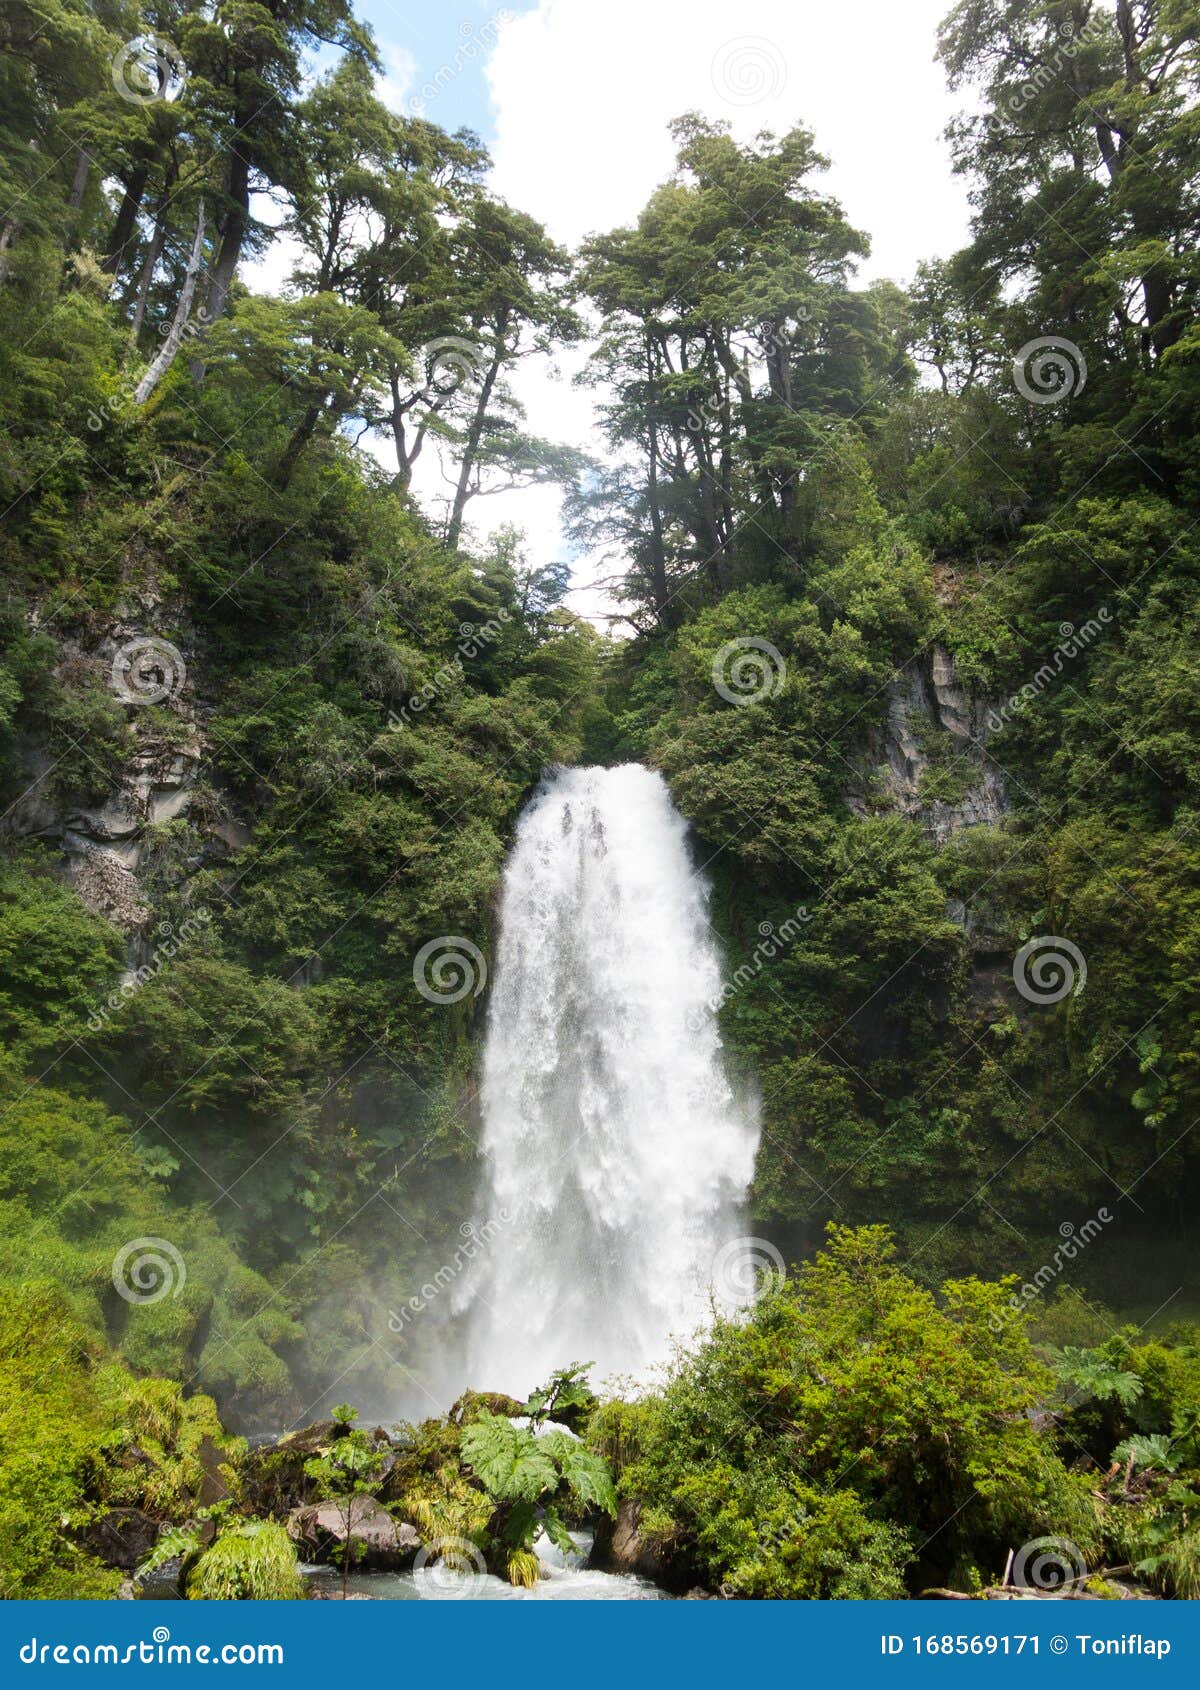 water jump el rincon of el venado river, in conaripe, panguipulli, in the middle of the villarica national park. in araucania or